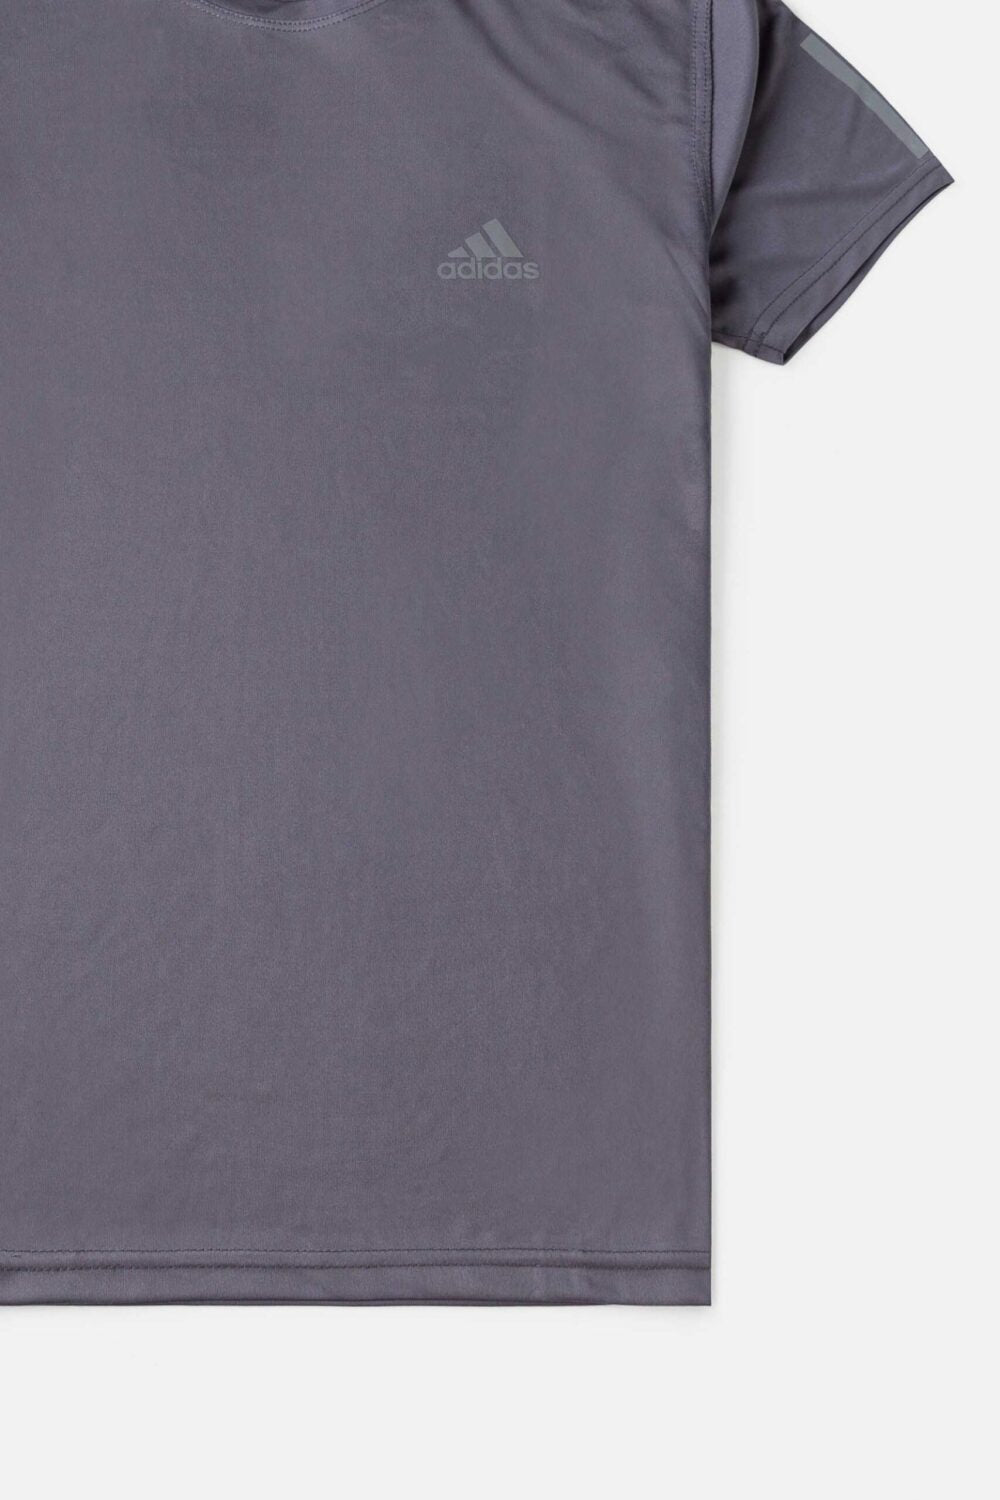 Adidas Premium Sports T Shirt – Super Grey